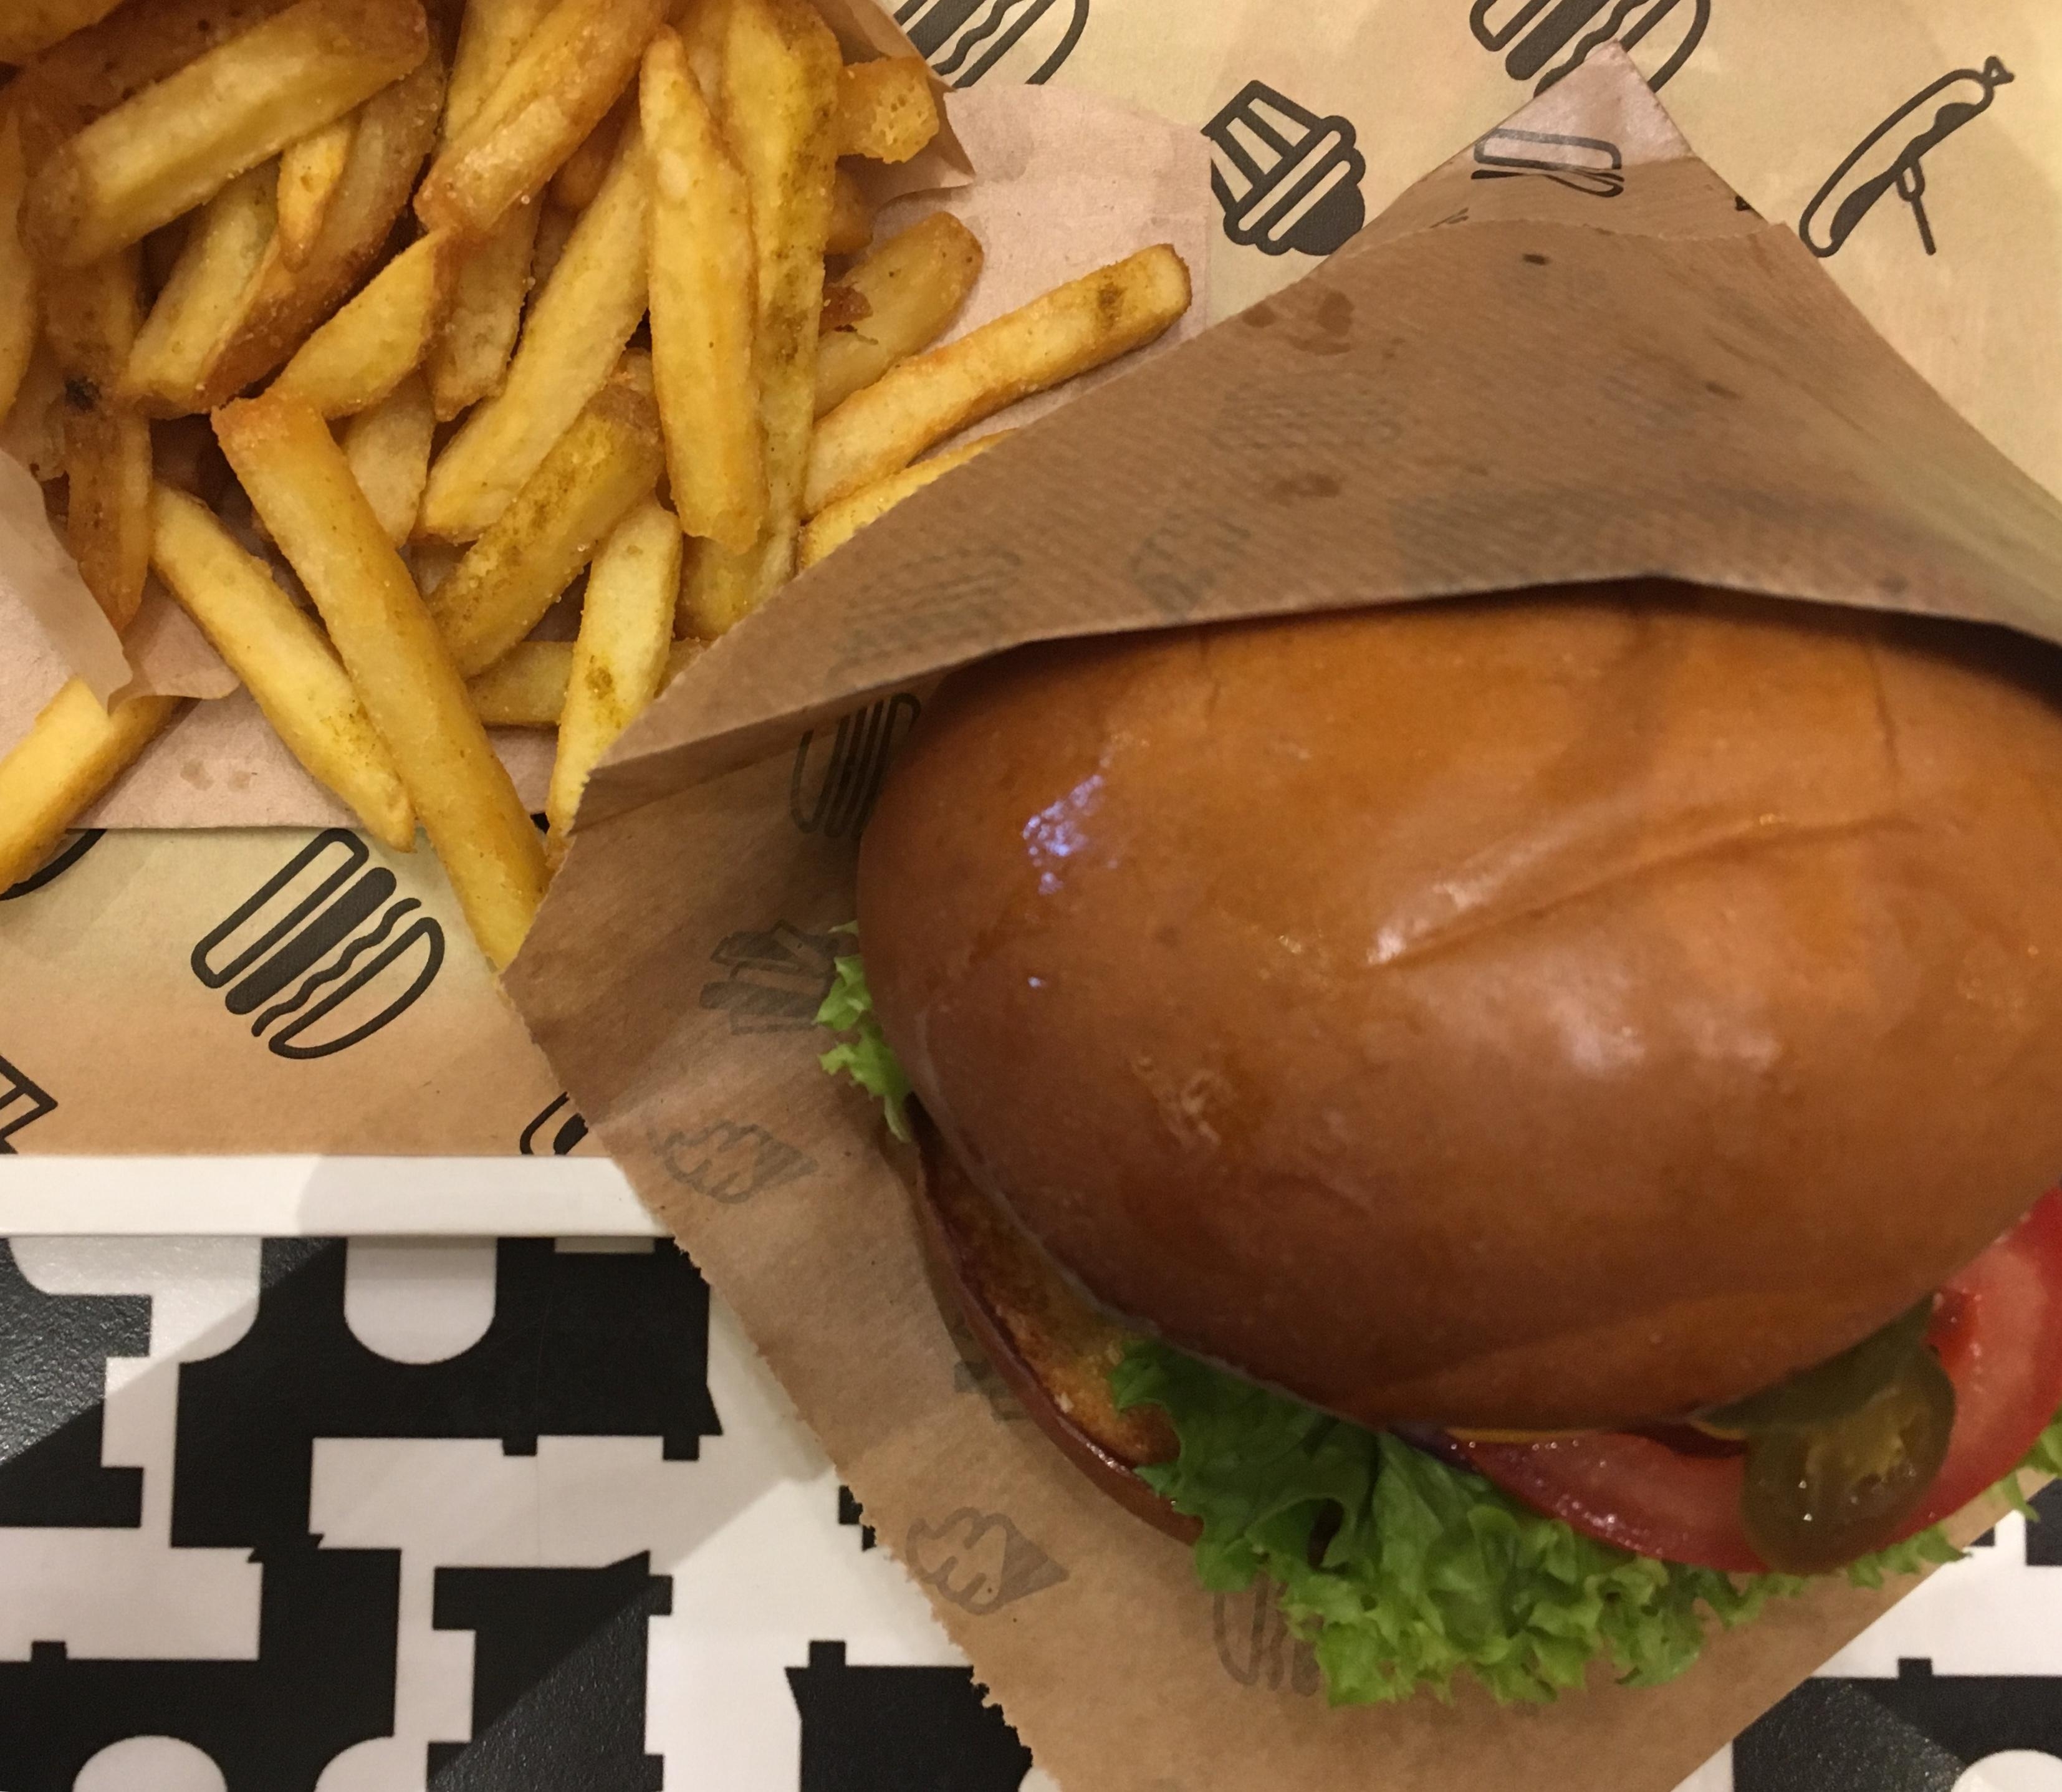 #fastfoodfriday 🍟🍔 #burger & pommes
#dreamteam #vegan #purepommesliebe #salatkannjeder